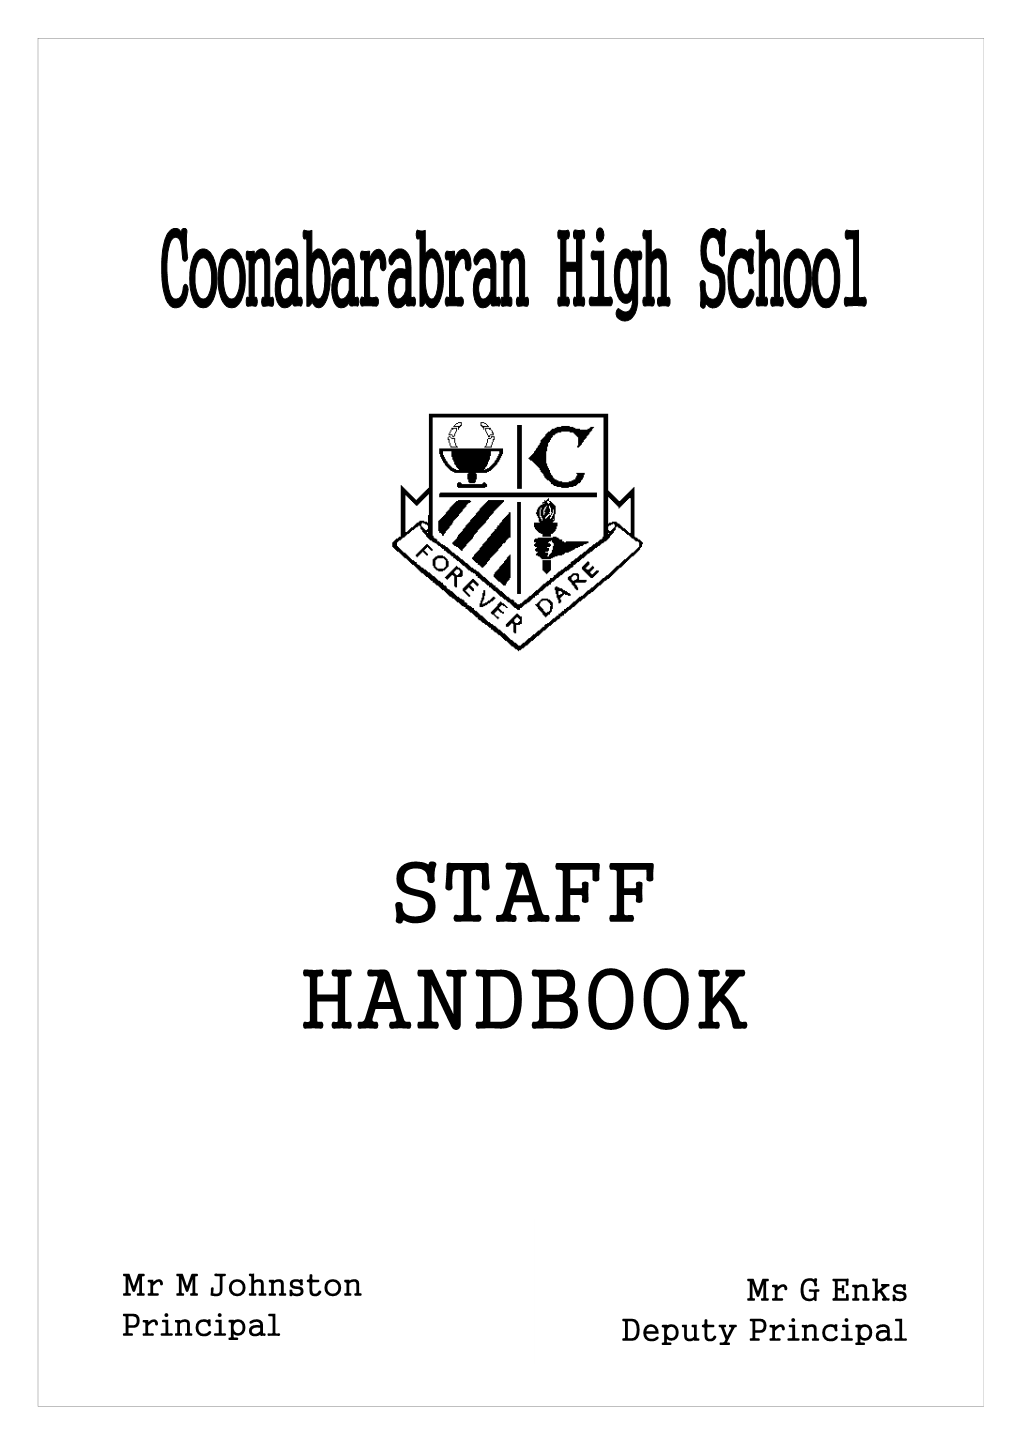 Coonabarabran High School